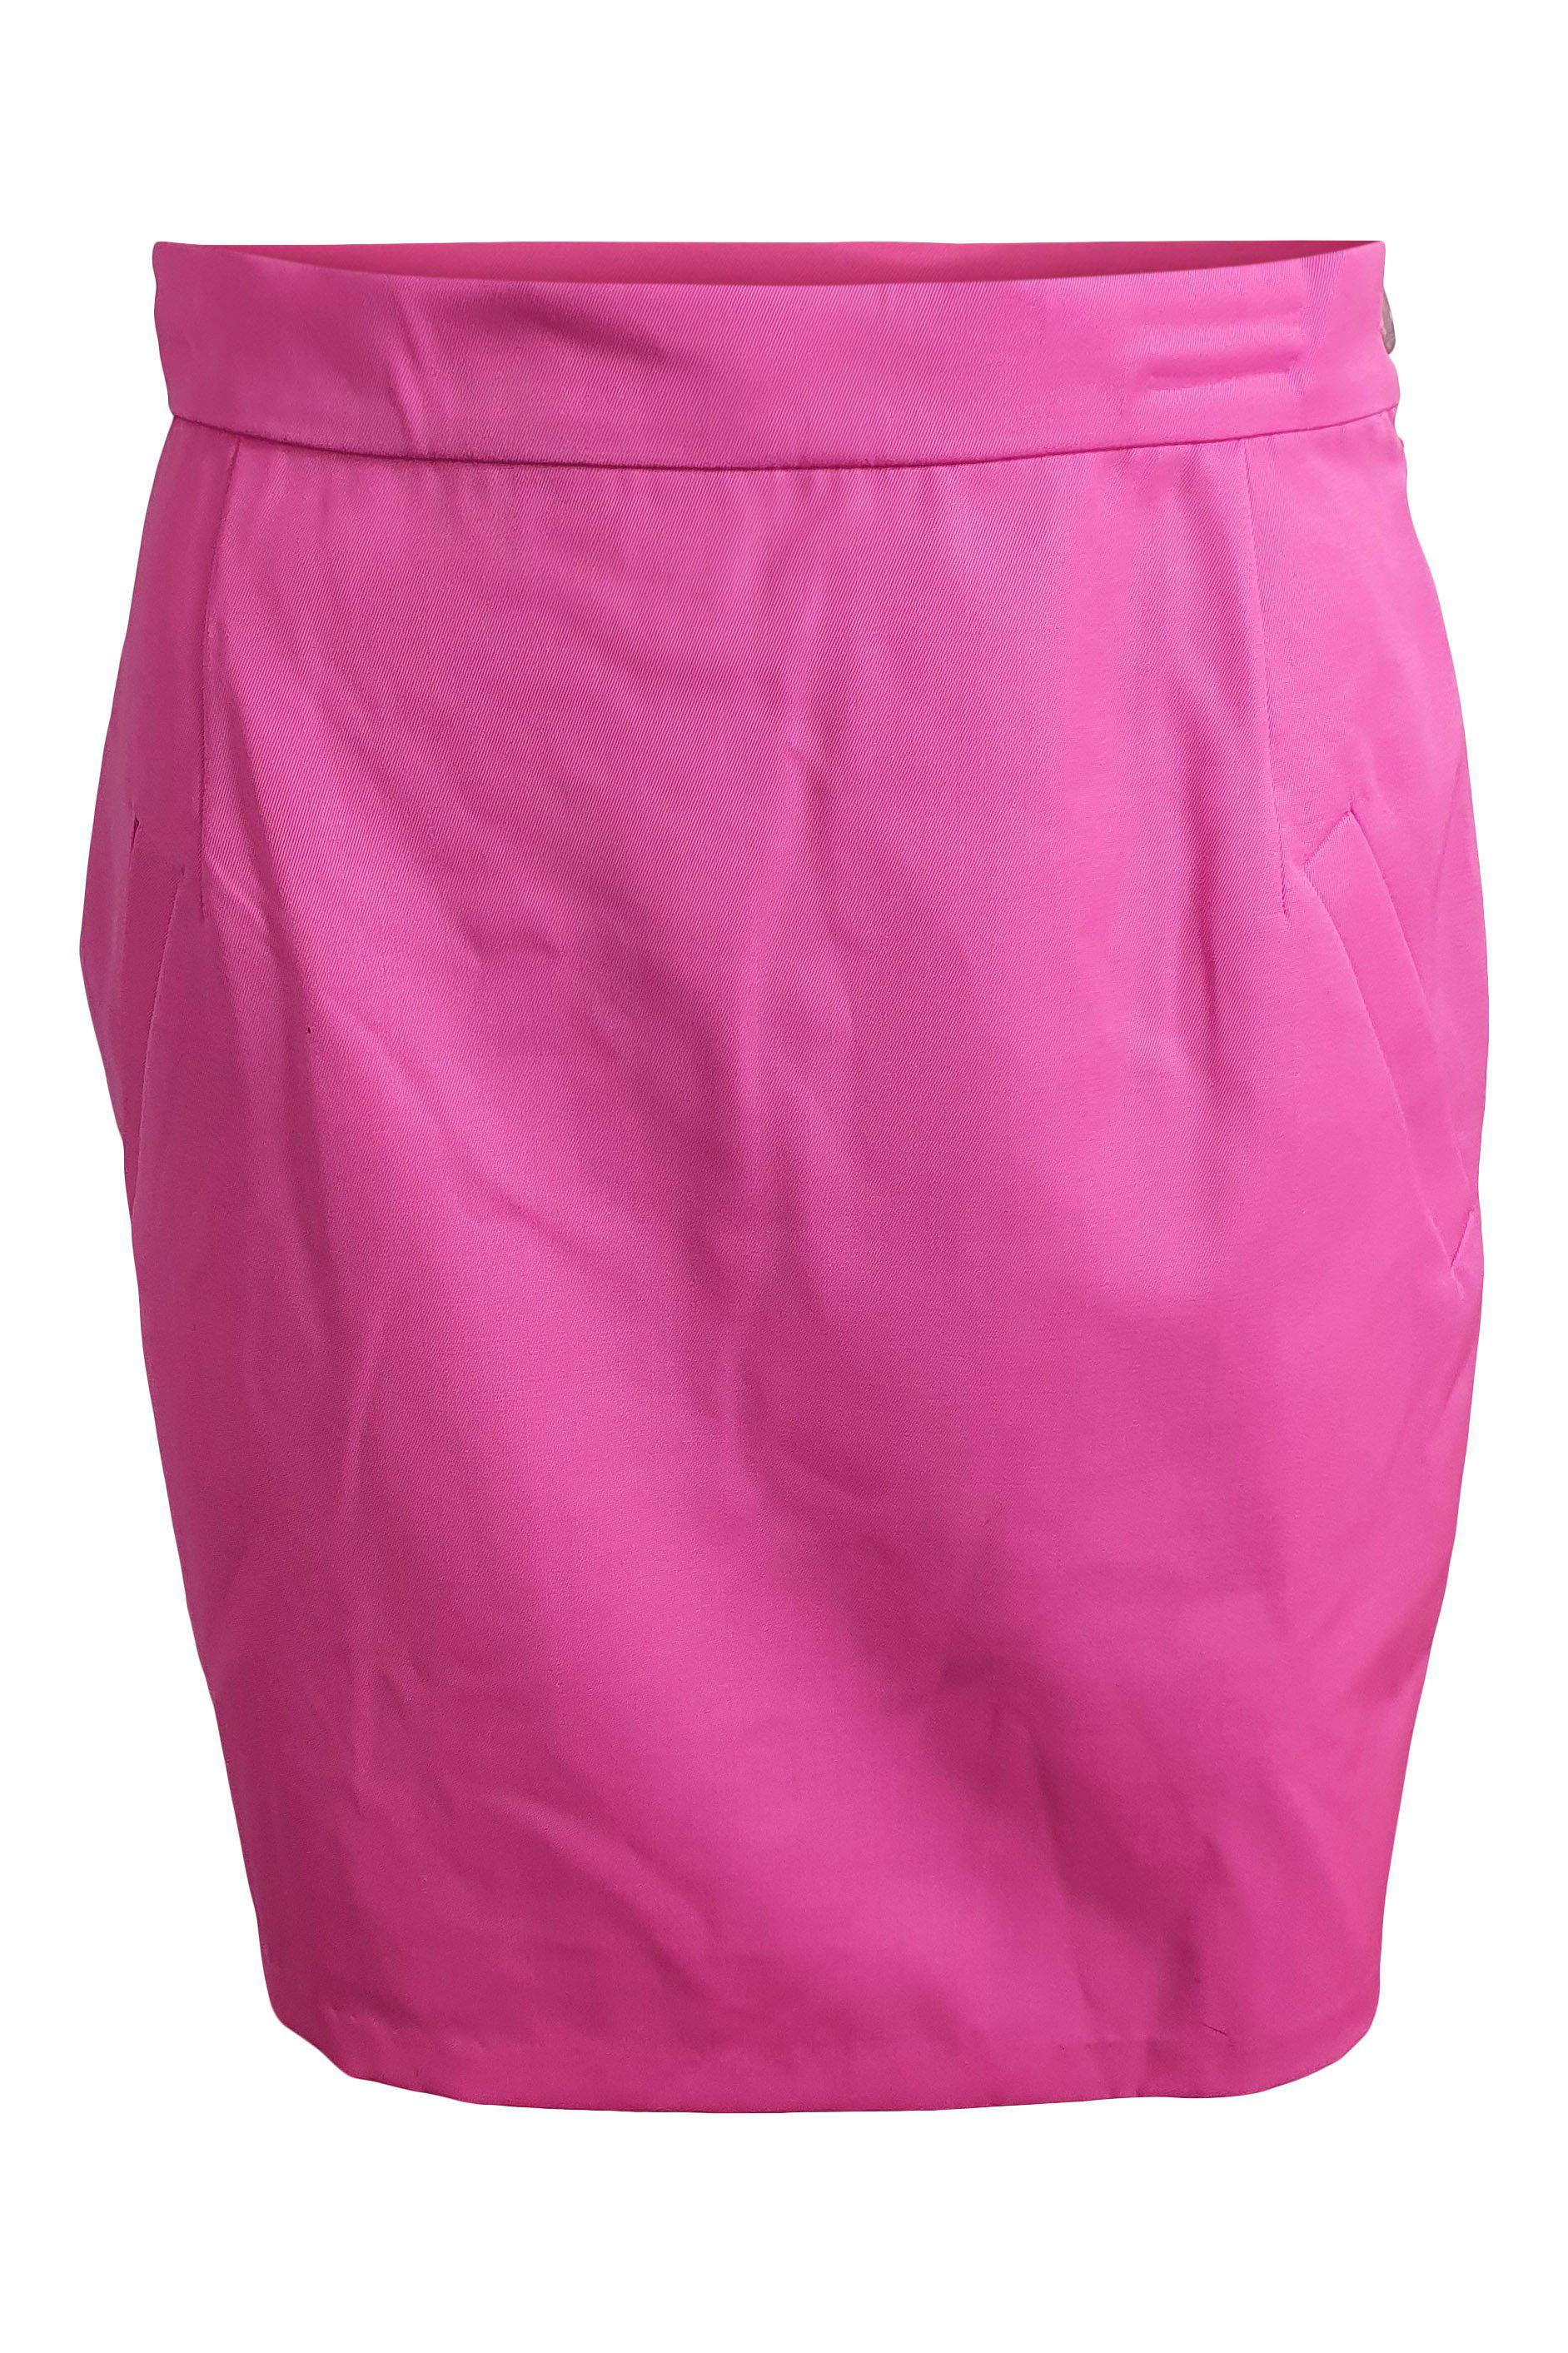 NATASHA ZINKO 100% Wool Hot Pink Slim Fit Mini Skirt (UK 8 | IT 40 | FR 36)-The Freperie